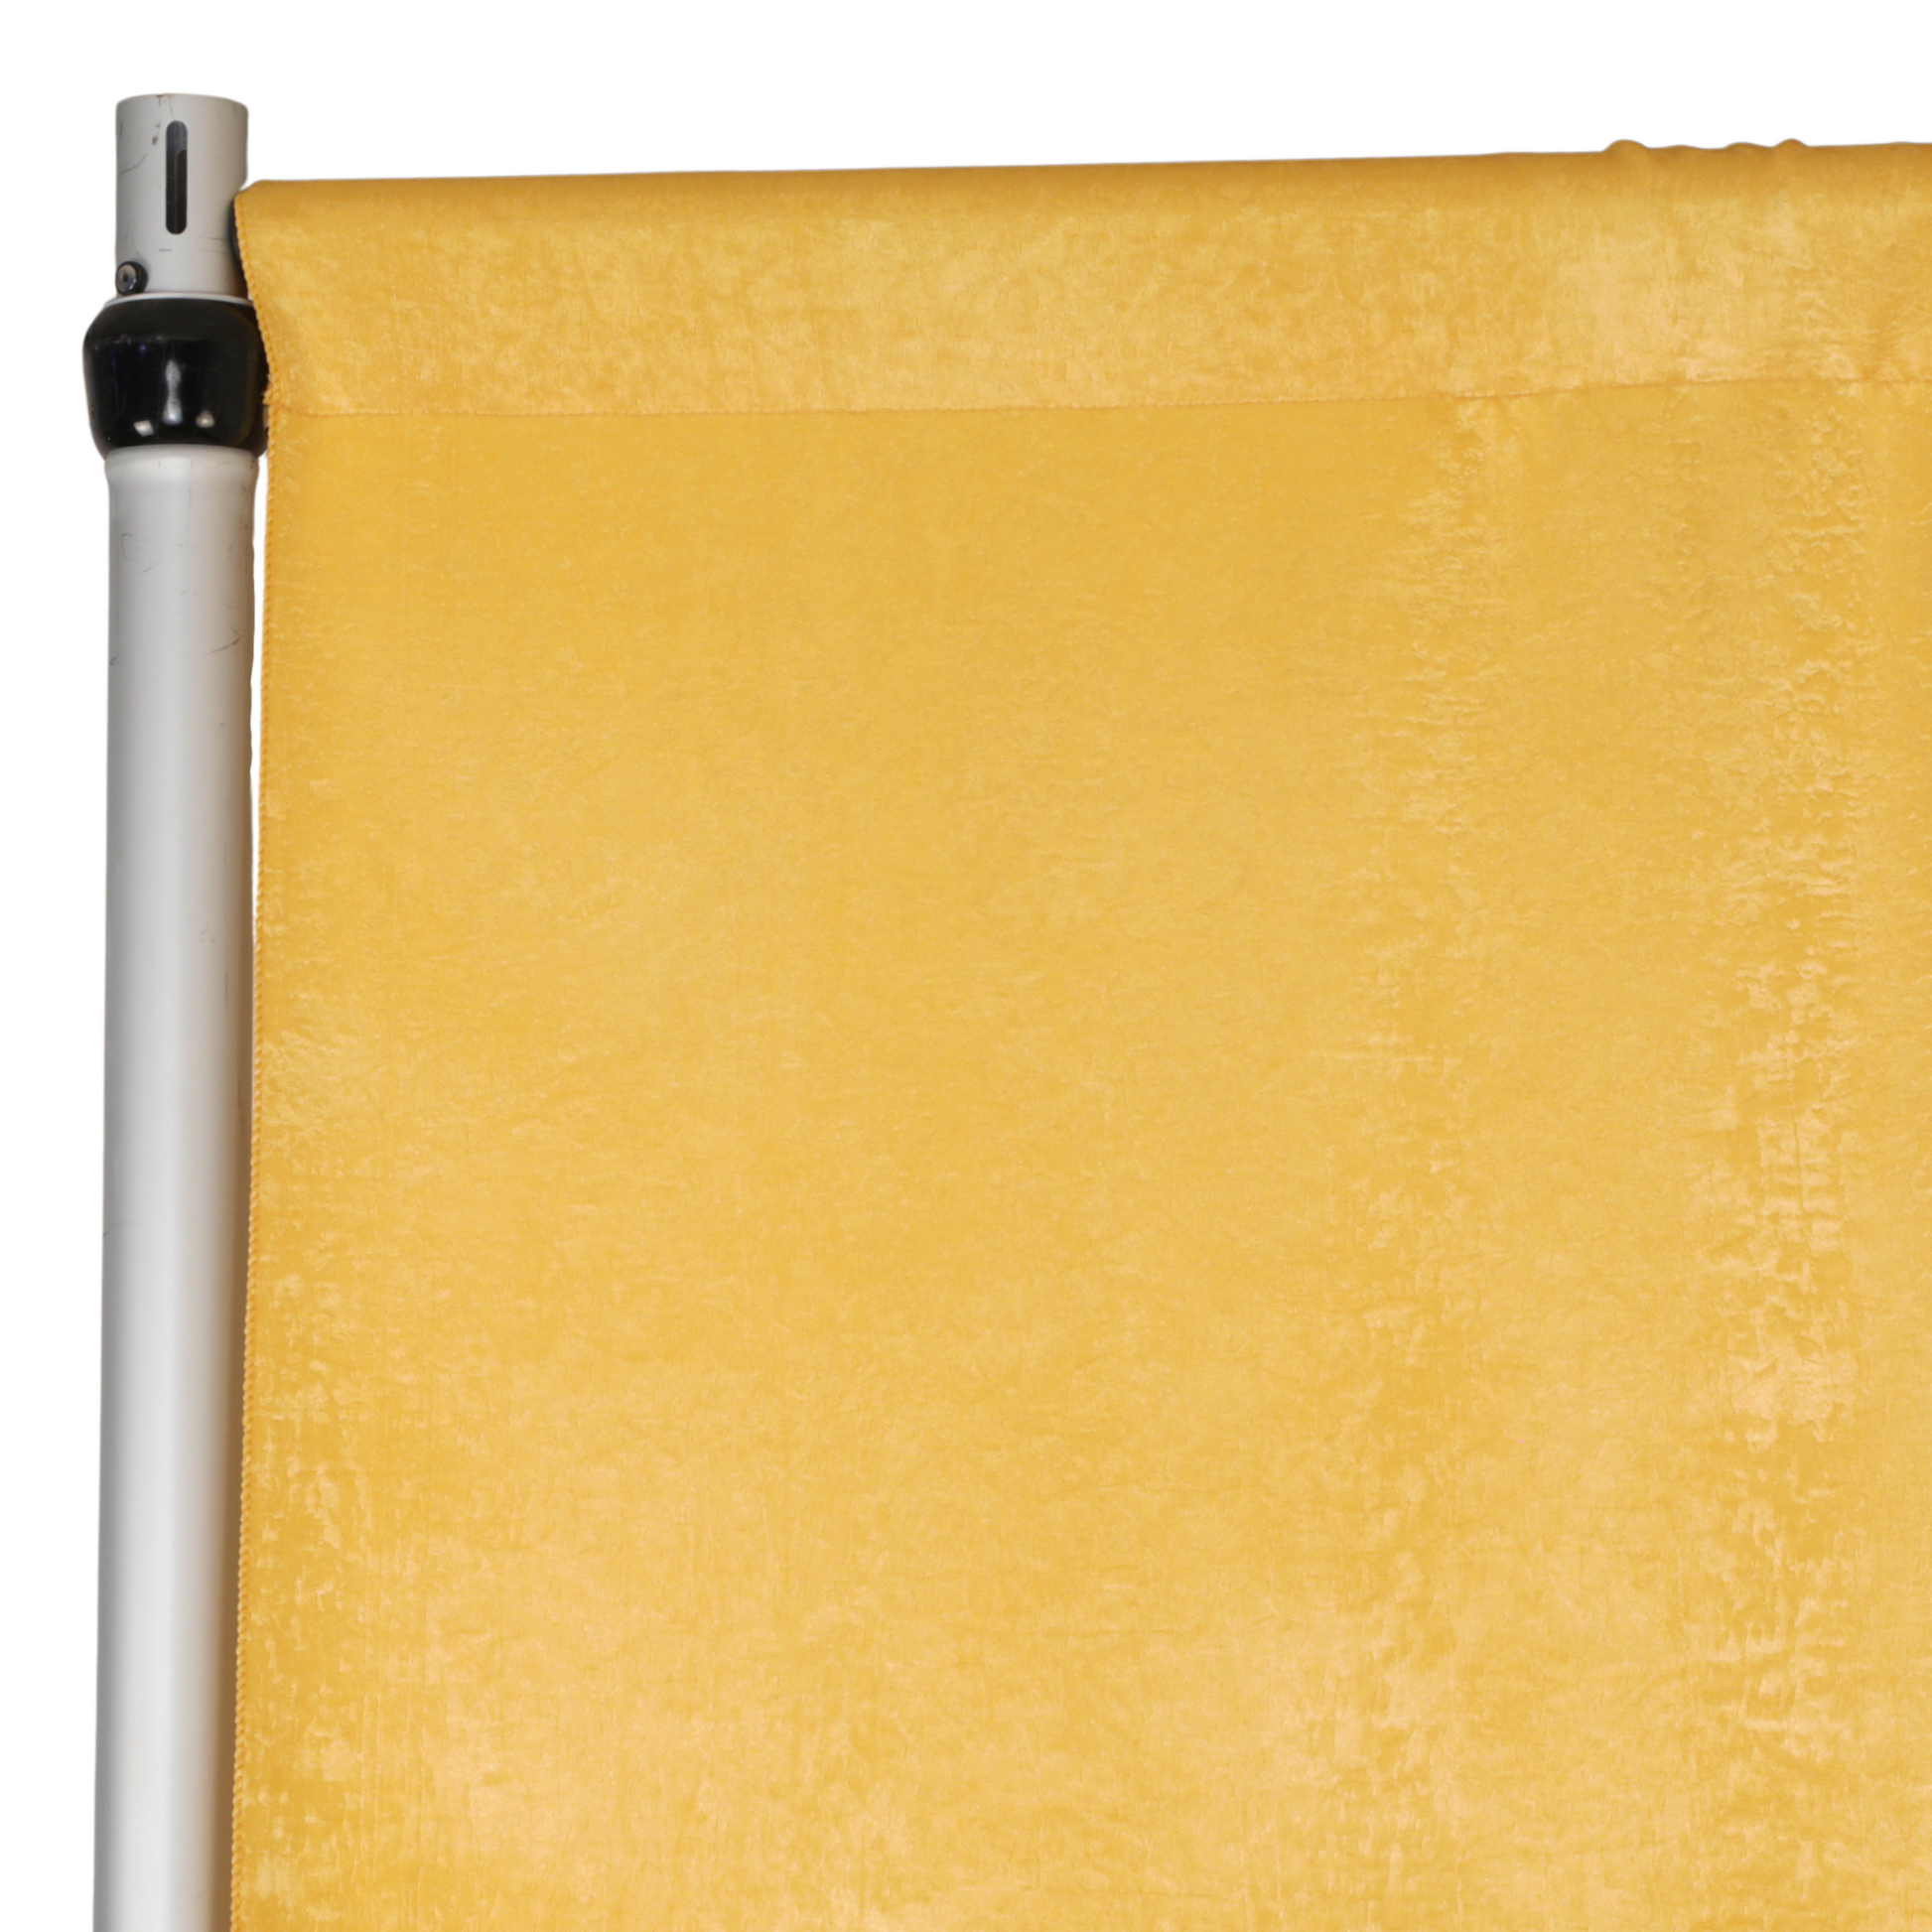 Crinkle Shimmer 10ft H x 52" W Drape/Backdrop Panel - Gold